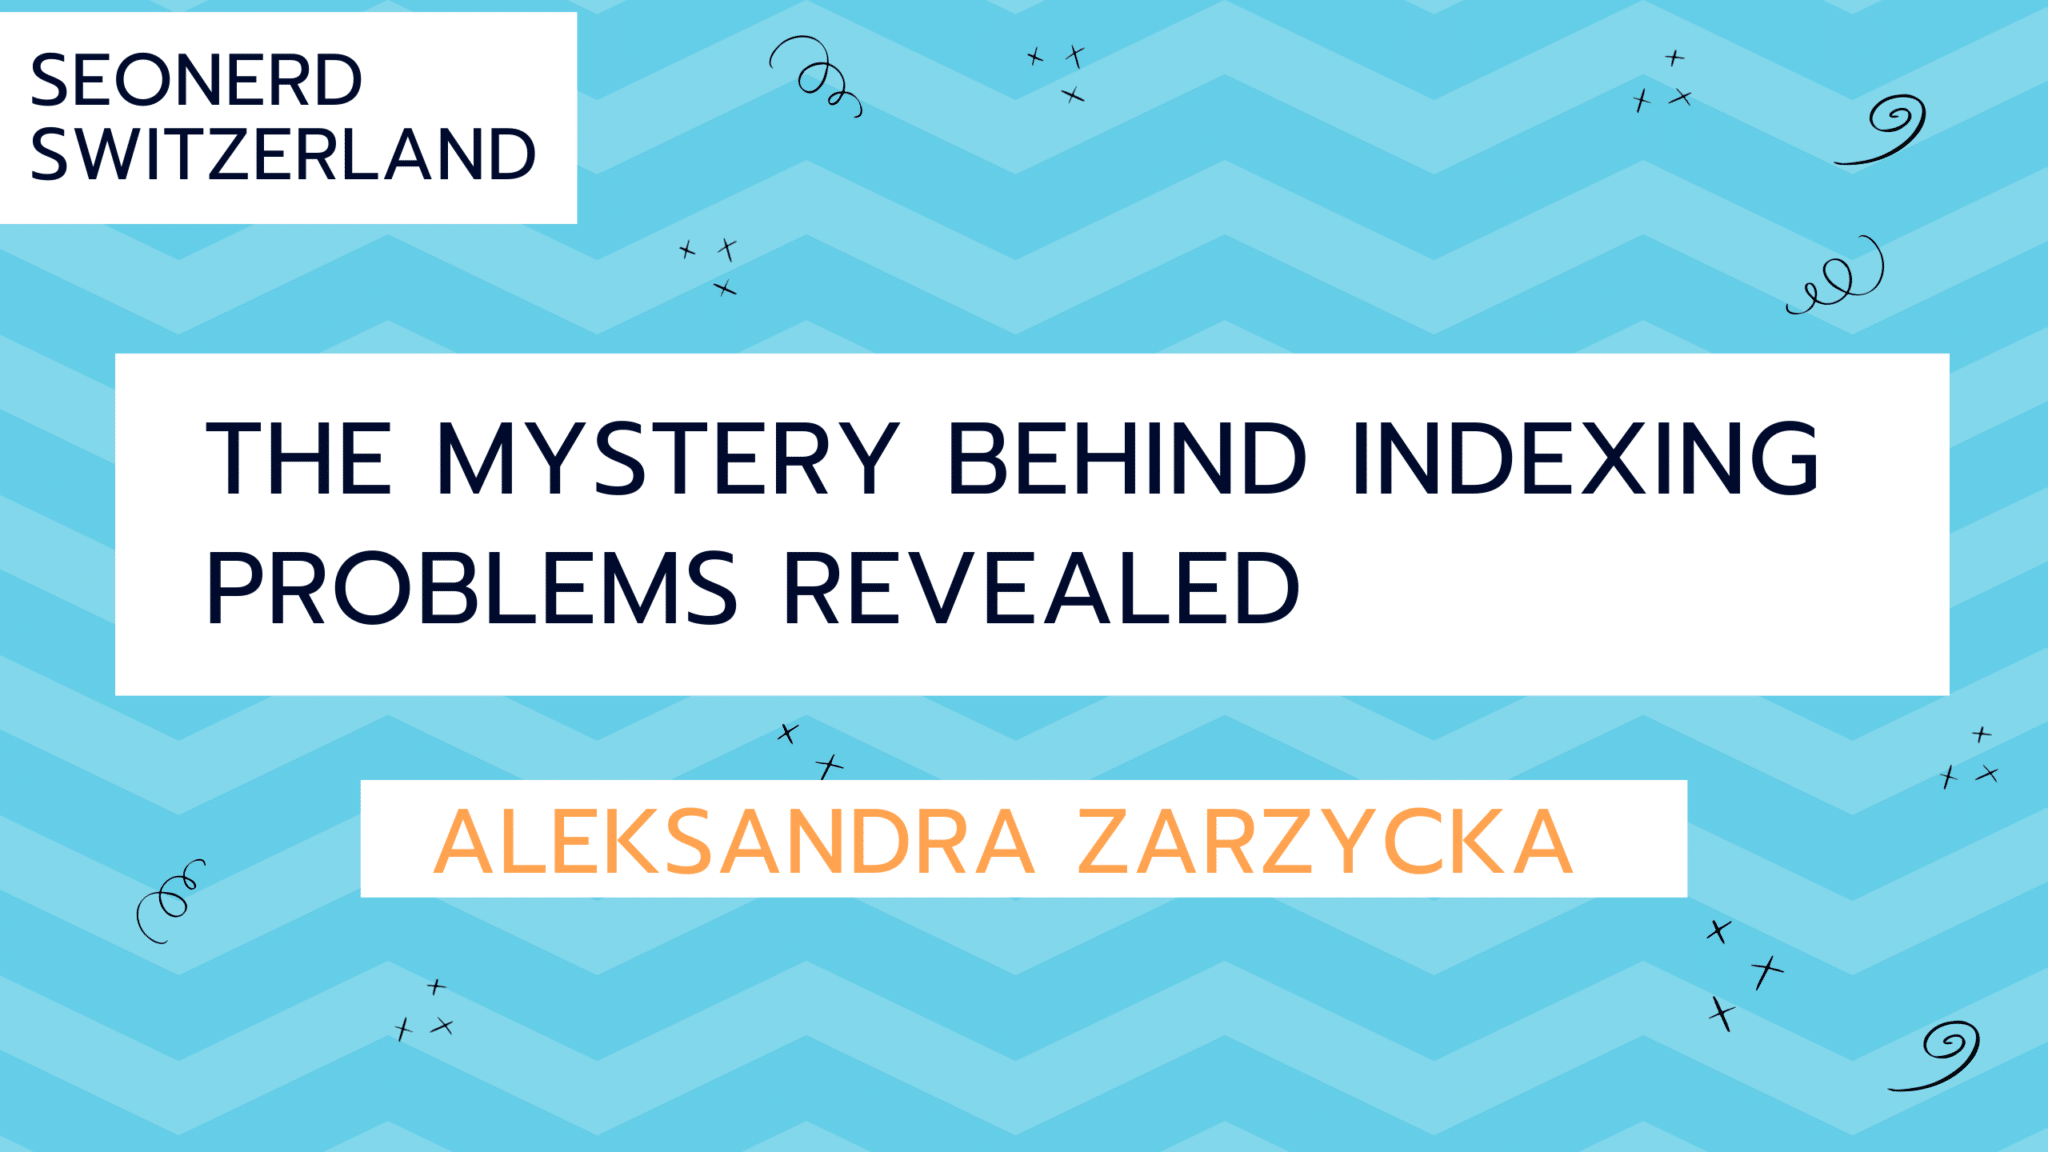 Aleksandra Zarzycka-indexing issues